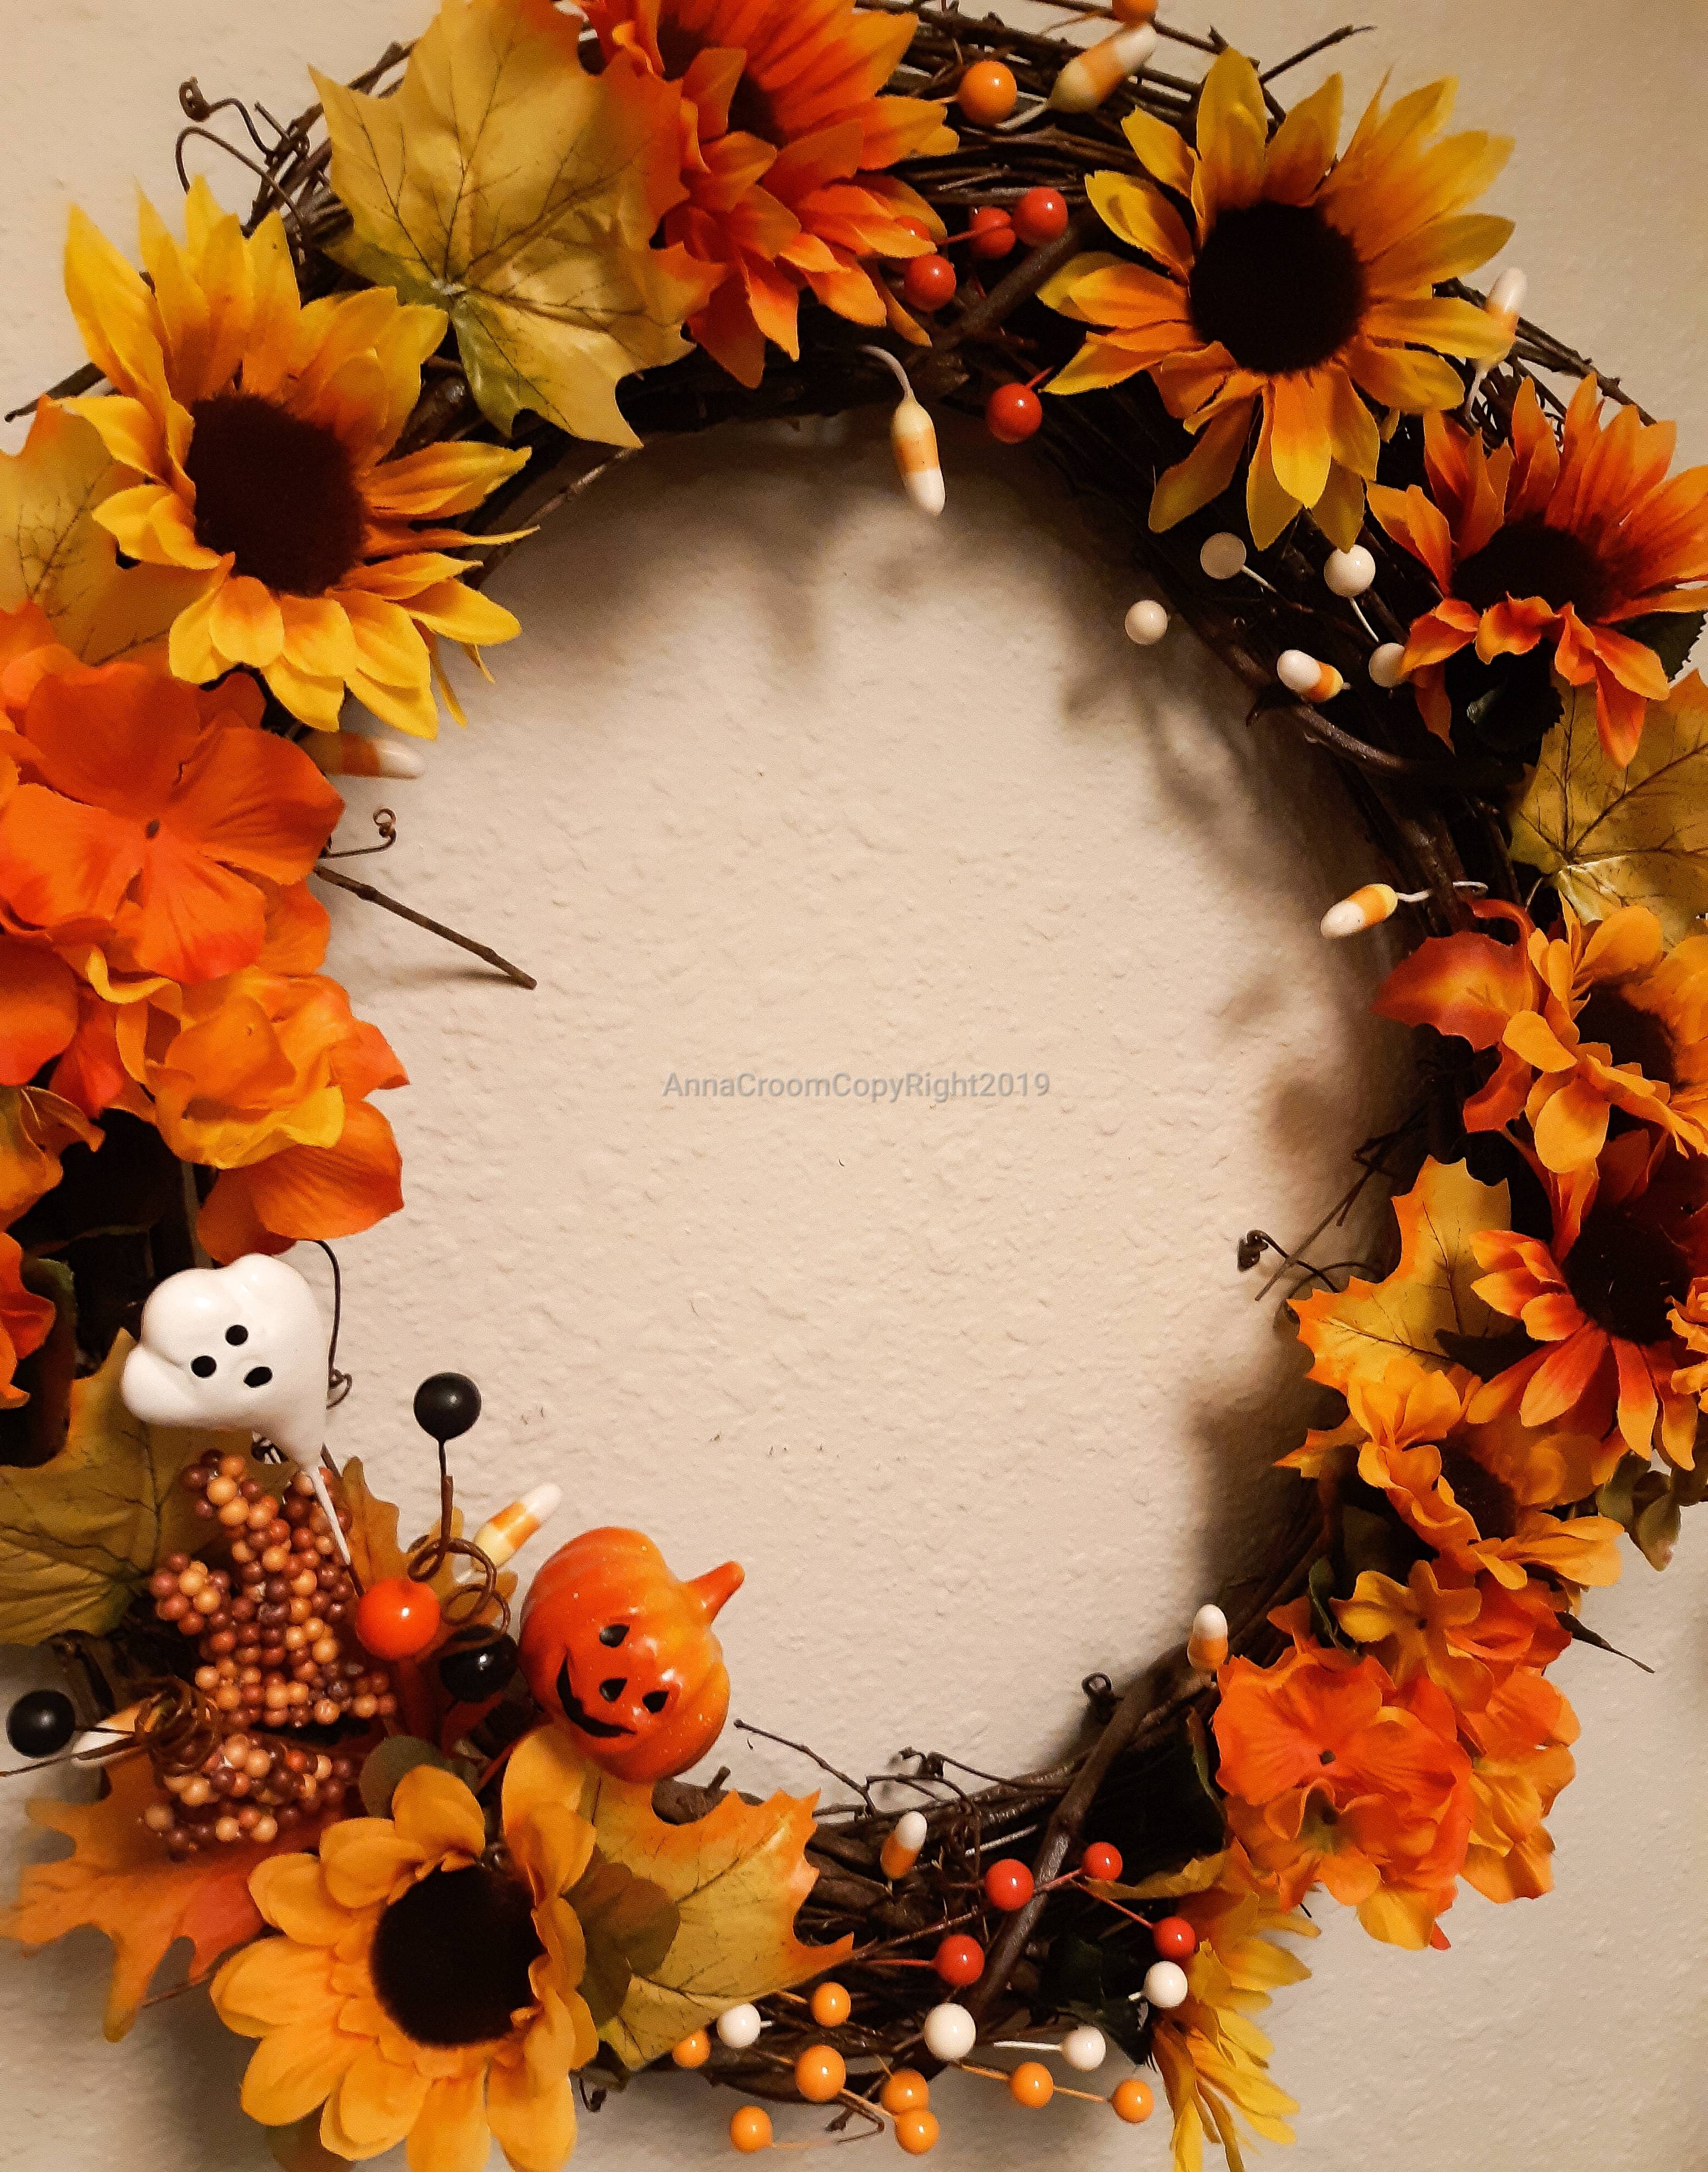 Autumn wreath and some drip art